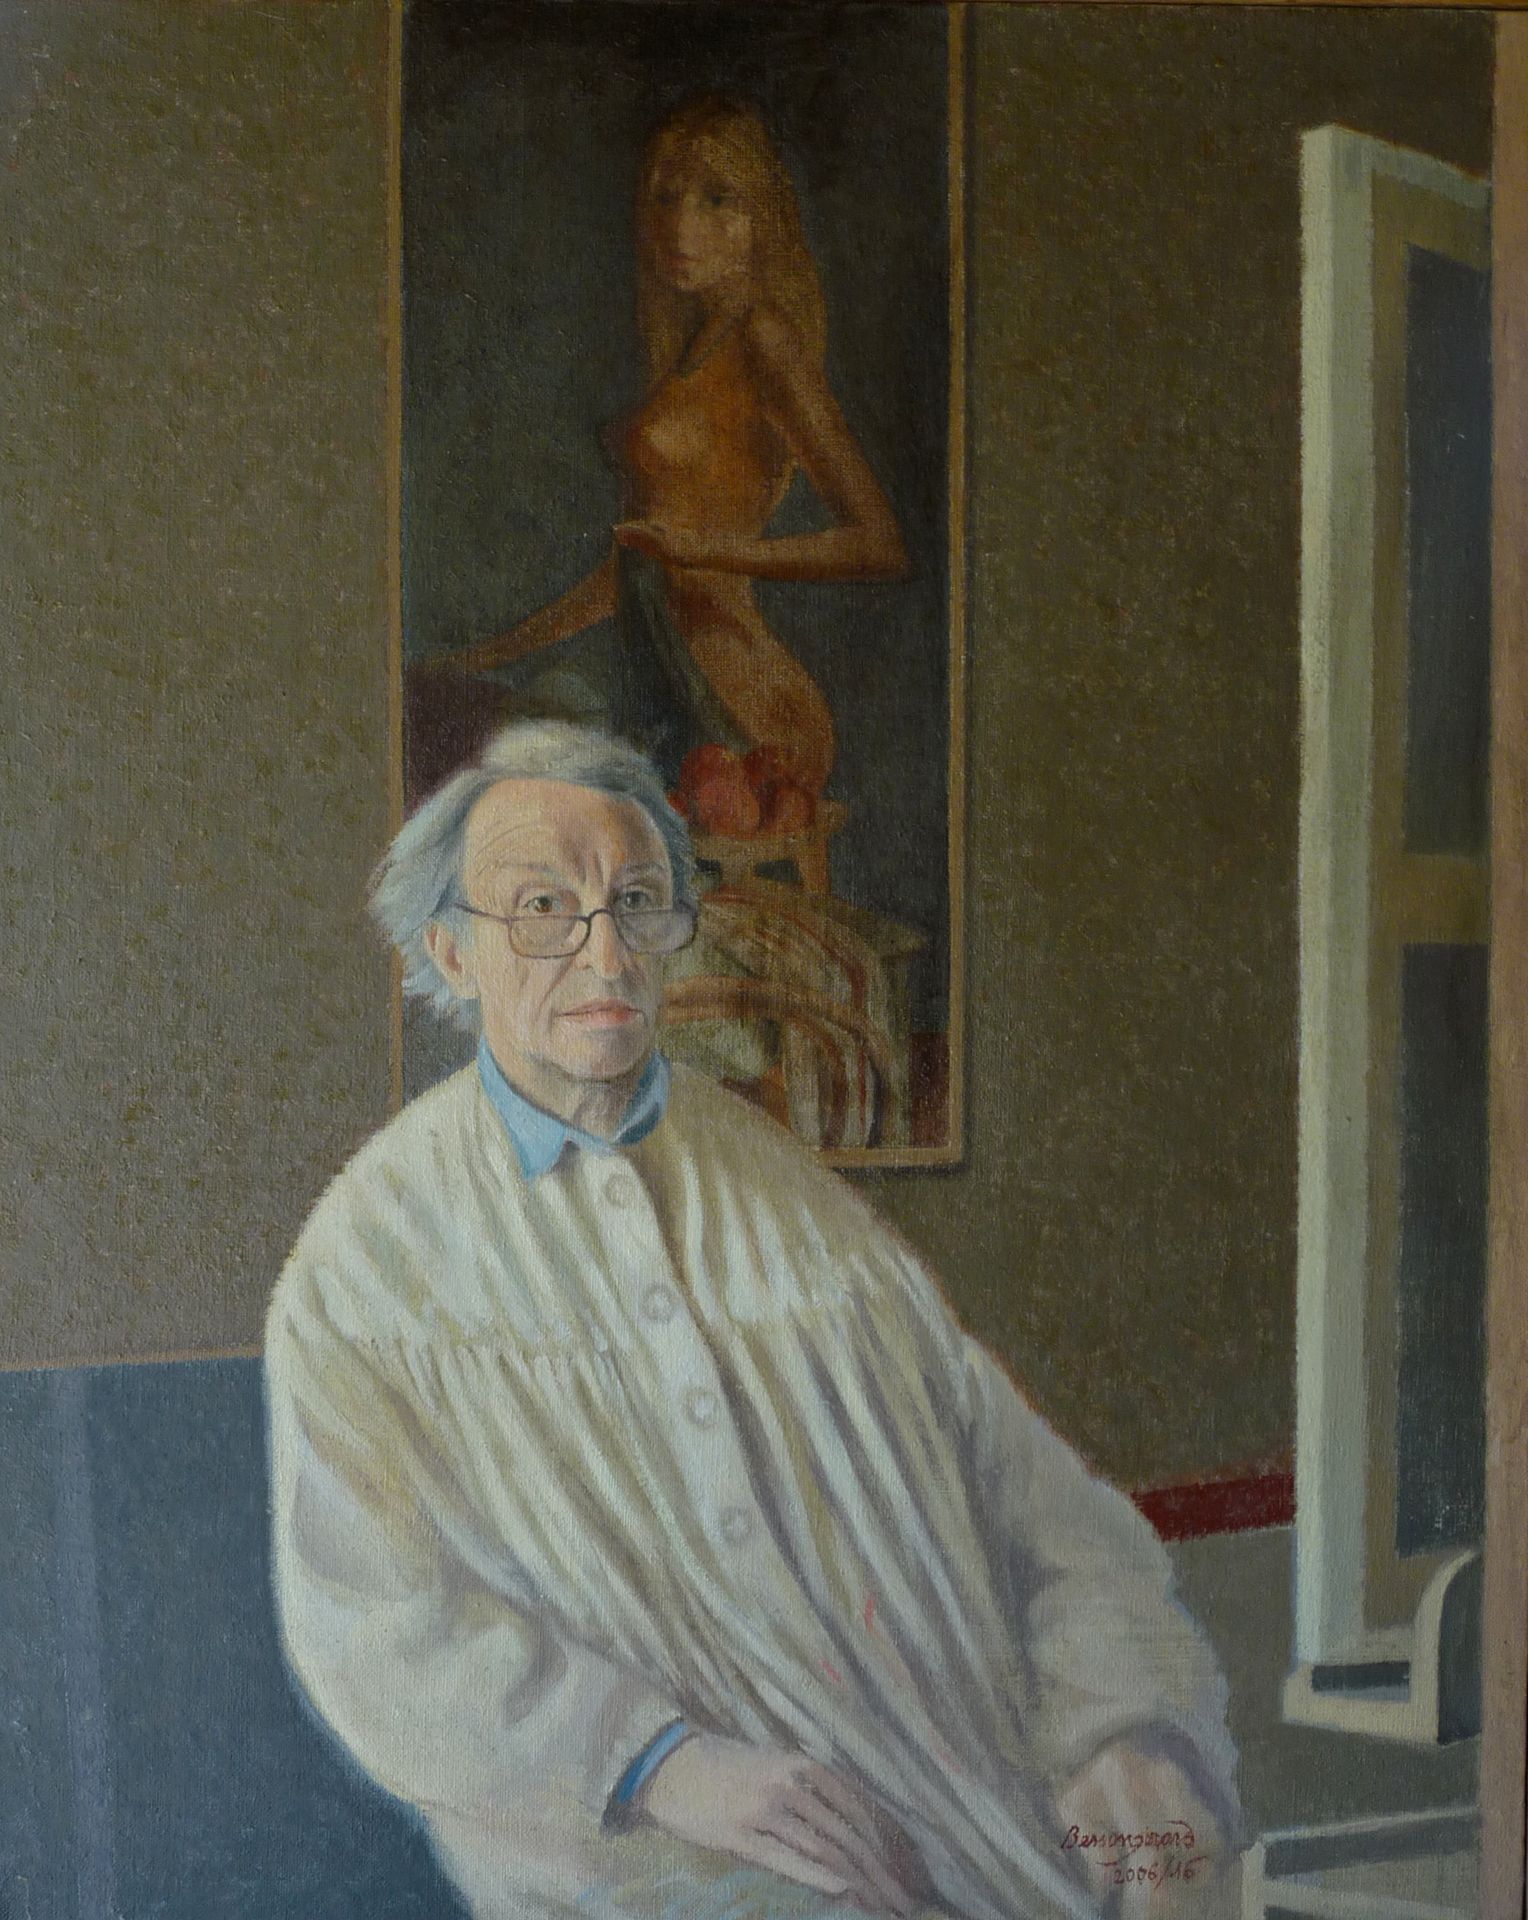 Null 让-克劳德-贝松-吉拉尔 (1938-2021)

自画像, 2006/2016

布面油画，右下方有签名和日期

81 x 65 cm